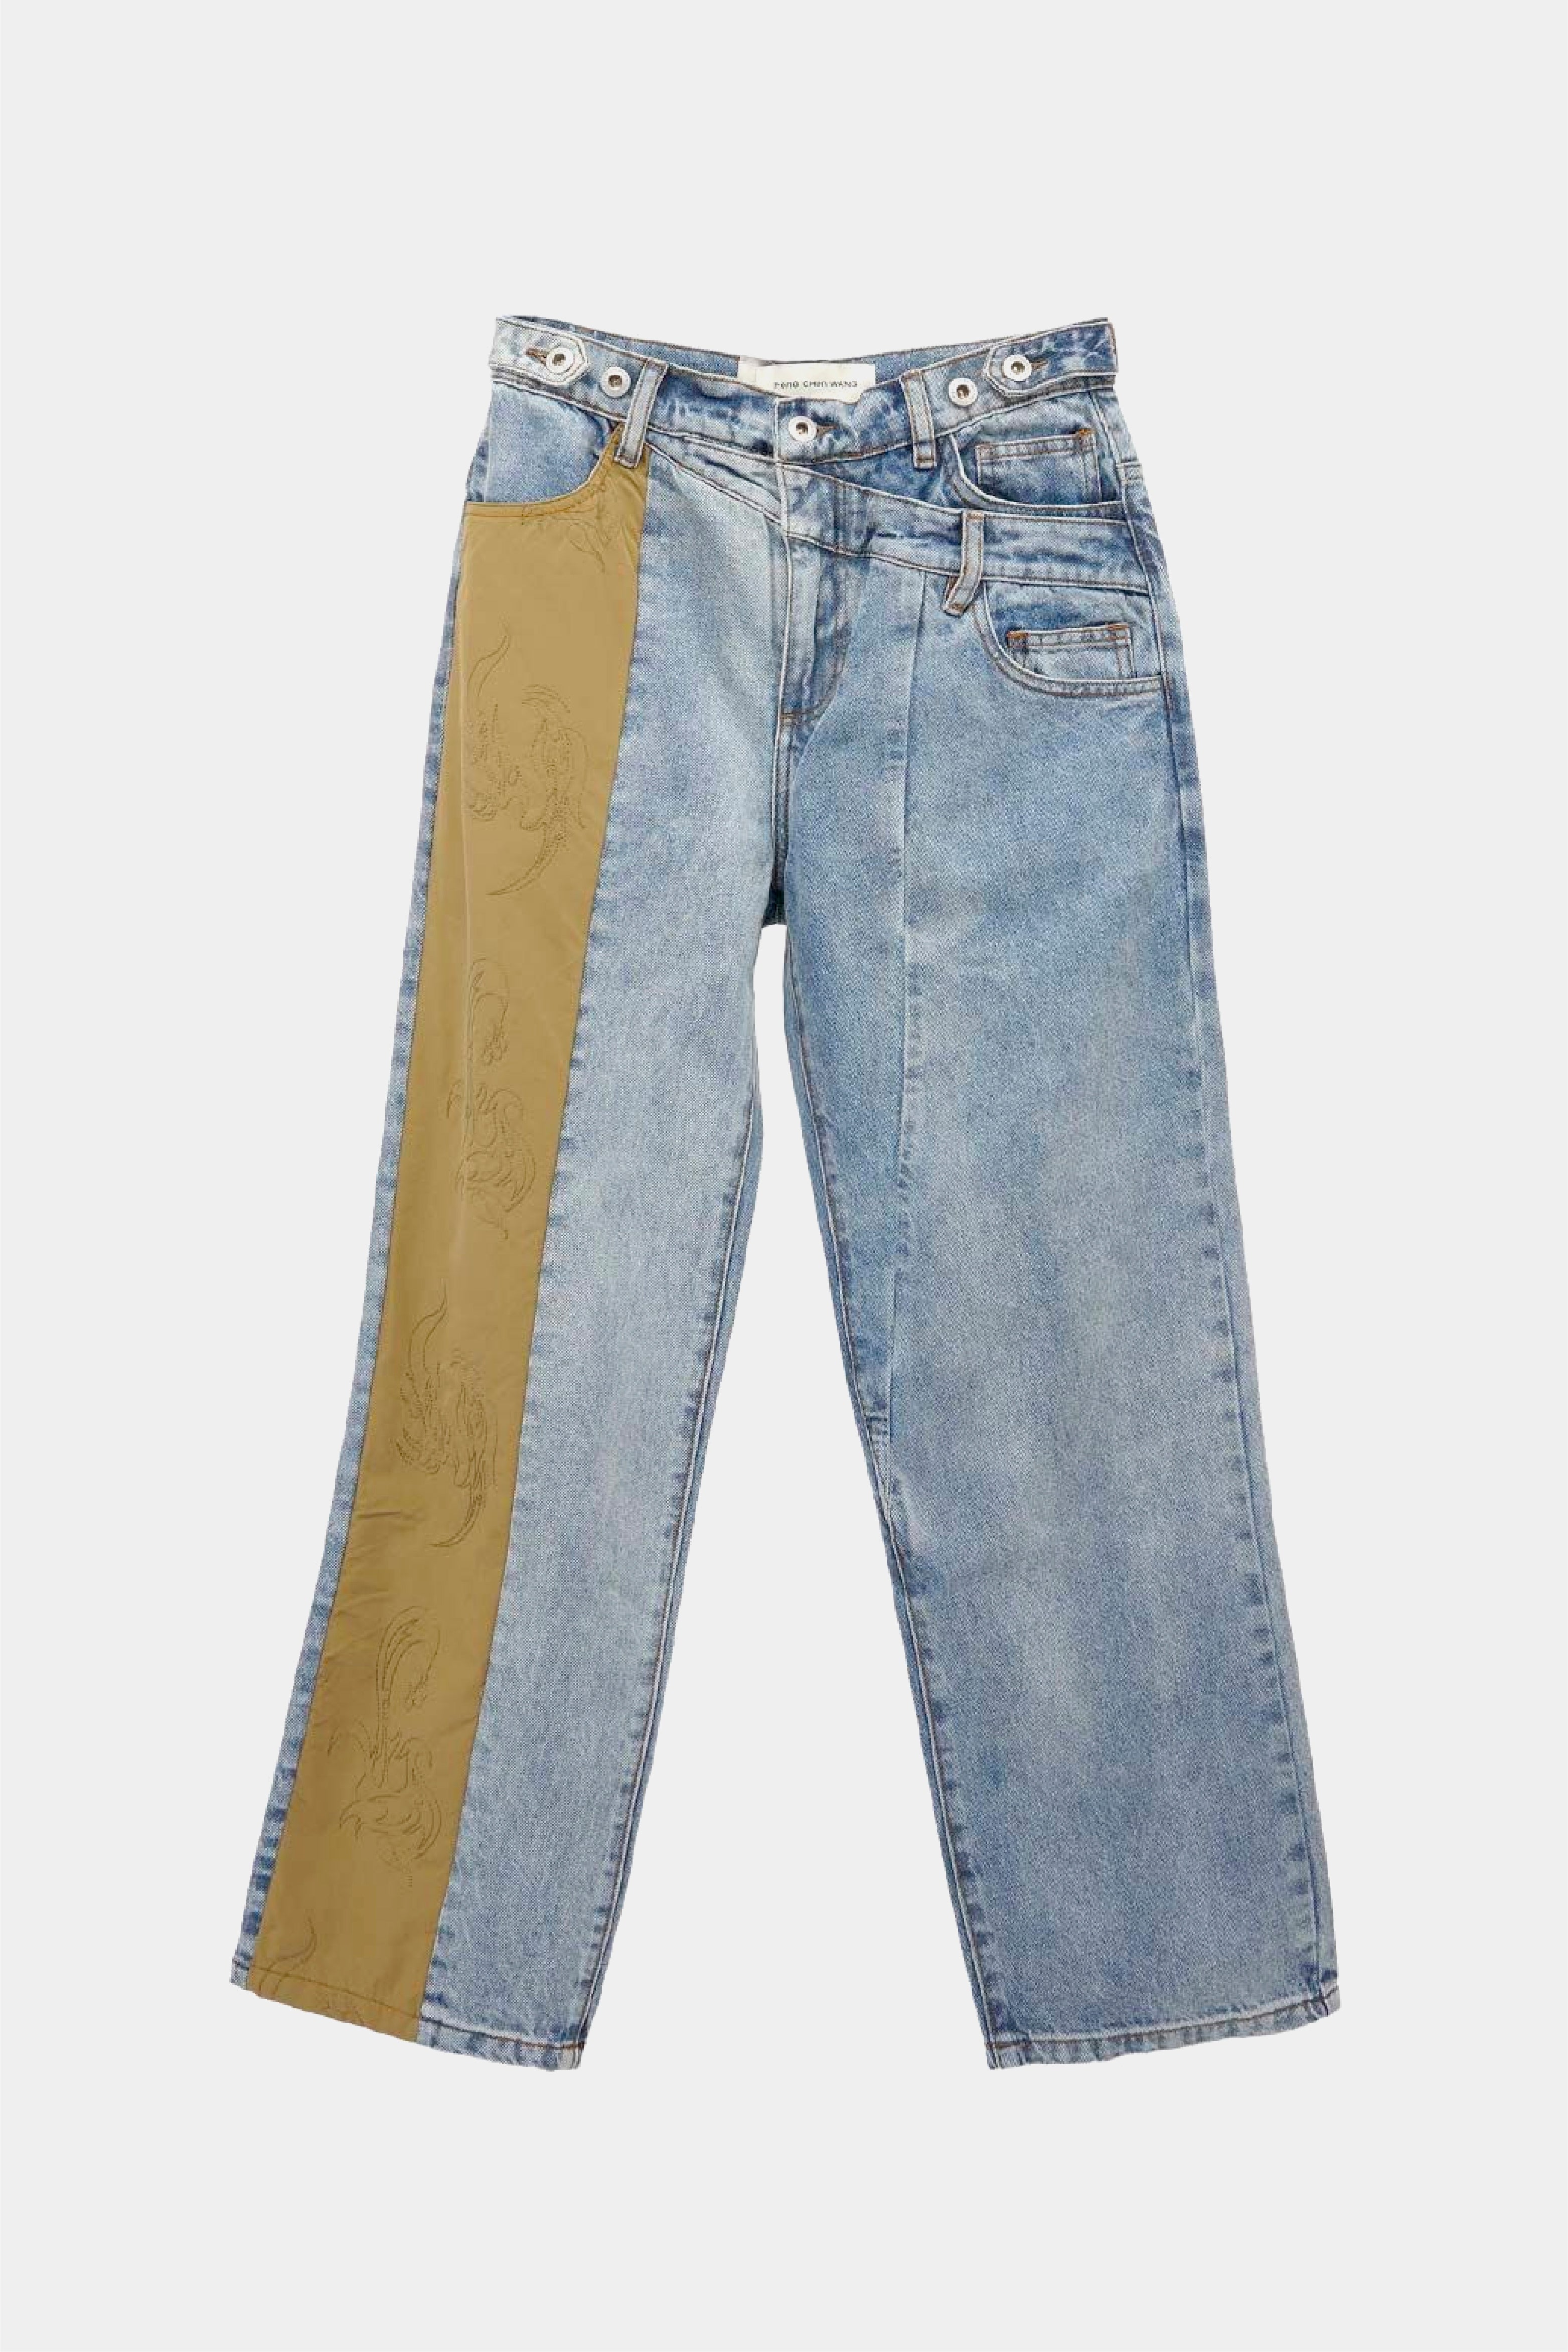 Selectshop FRAME - FENG CHEN WANG Phoenix Embroidery Panelled Jeans Bottoms Concept Store Dubai